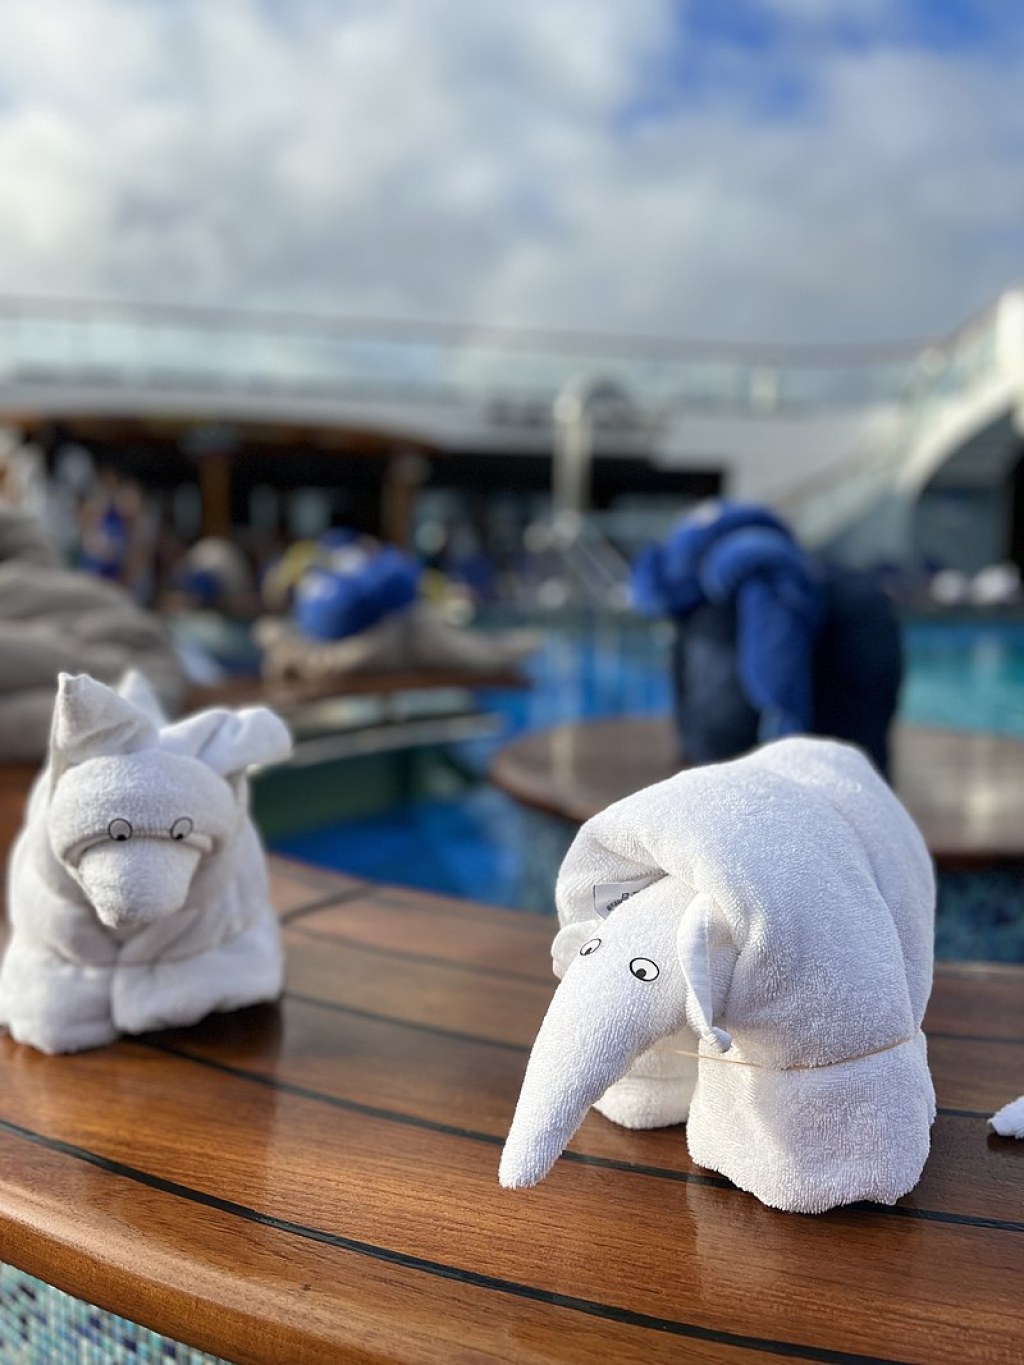 cruise ship towel animals - Towel animal - Wikipedia